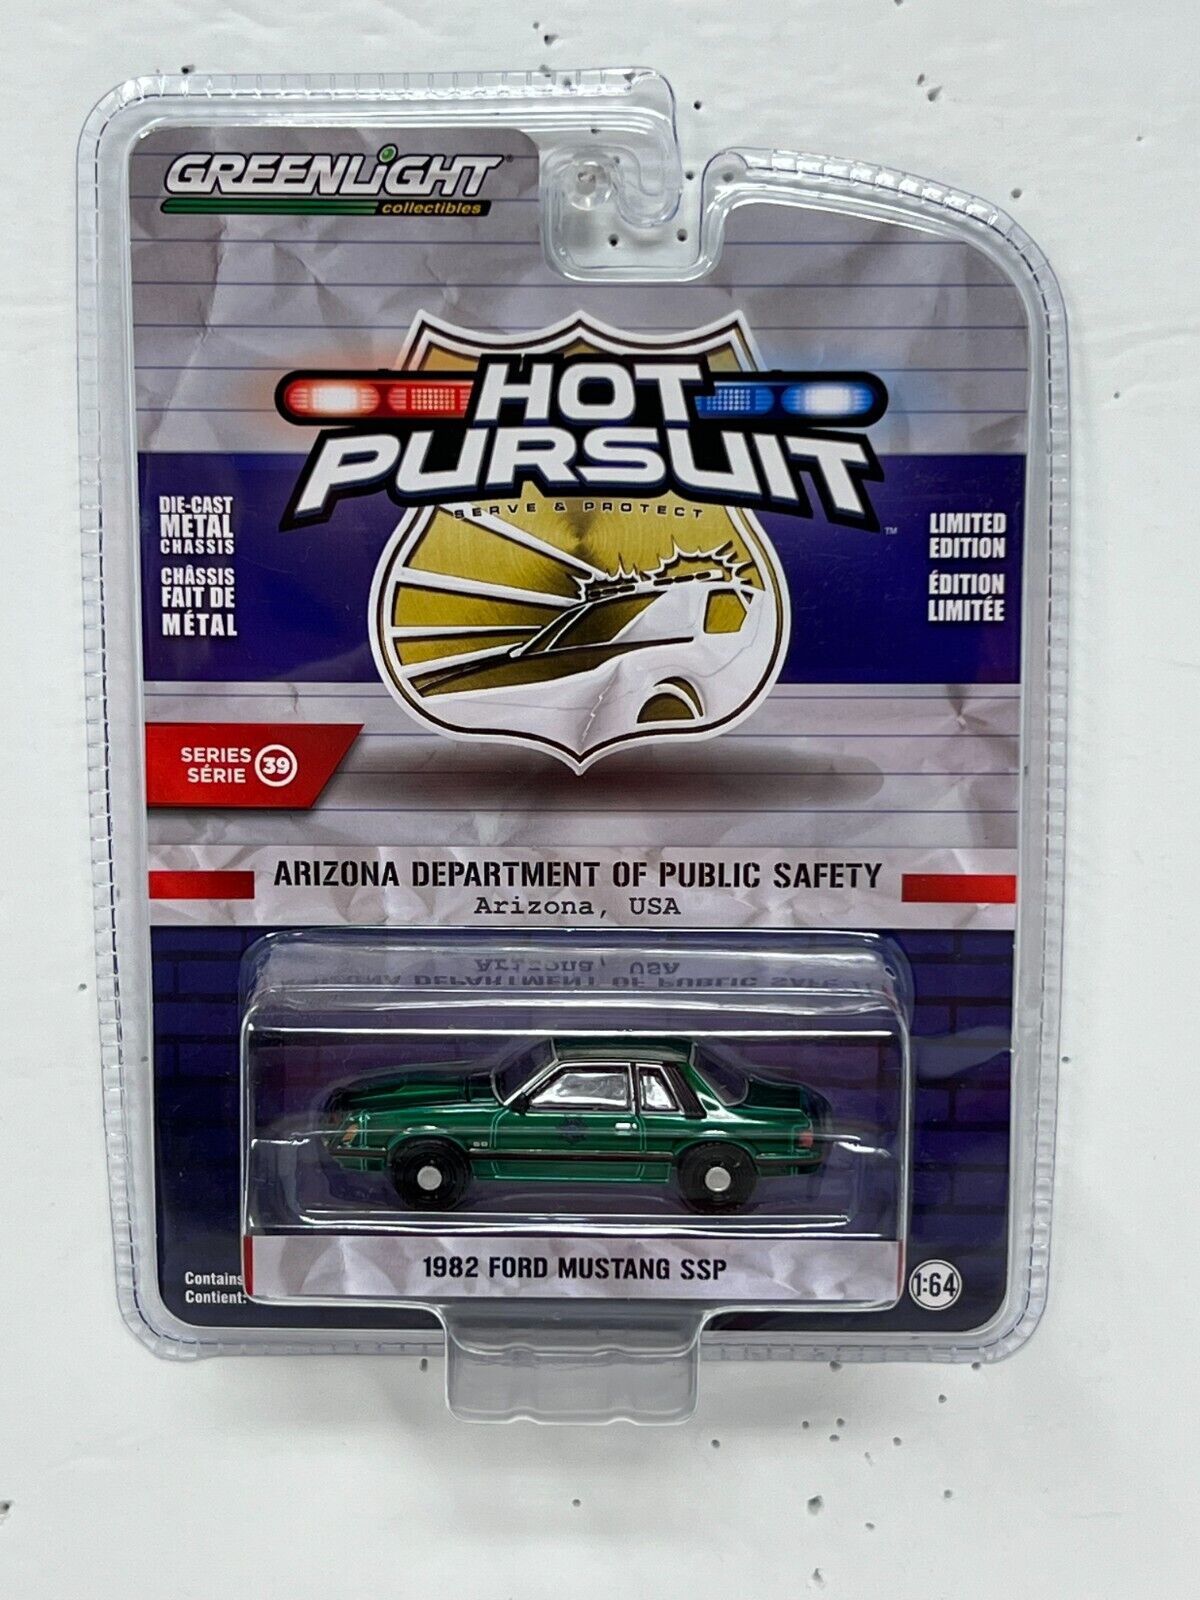 Greenlight Hot Pursuit 1982 Ford Mustang SSP GREEN MACHINE 1:64 Diecast